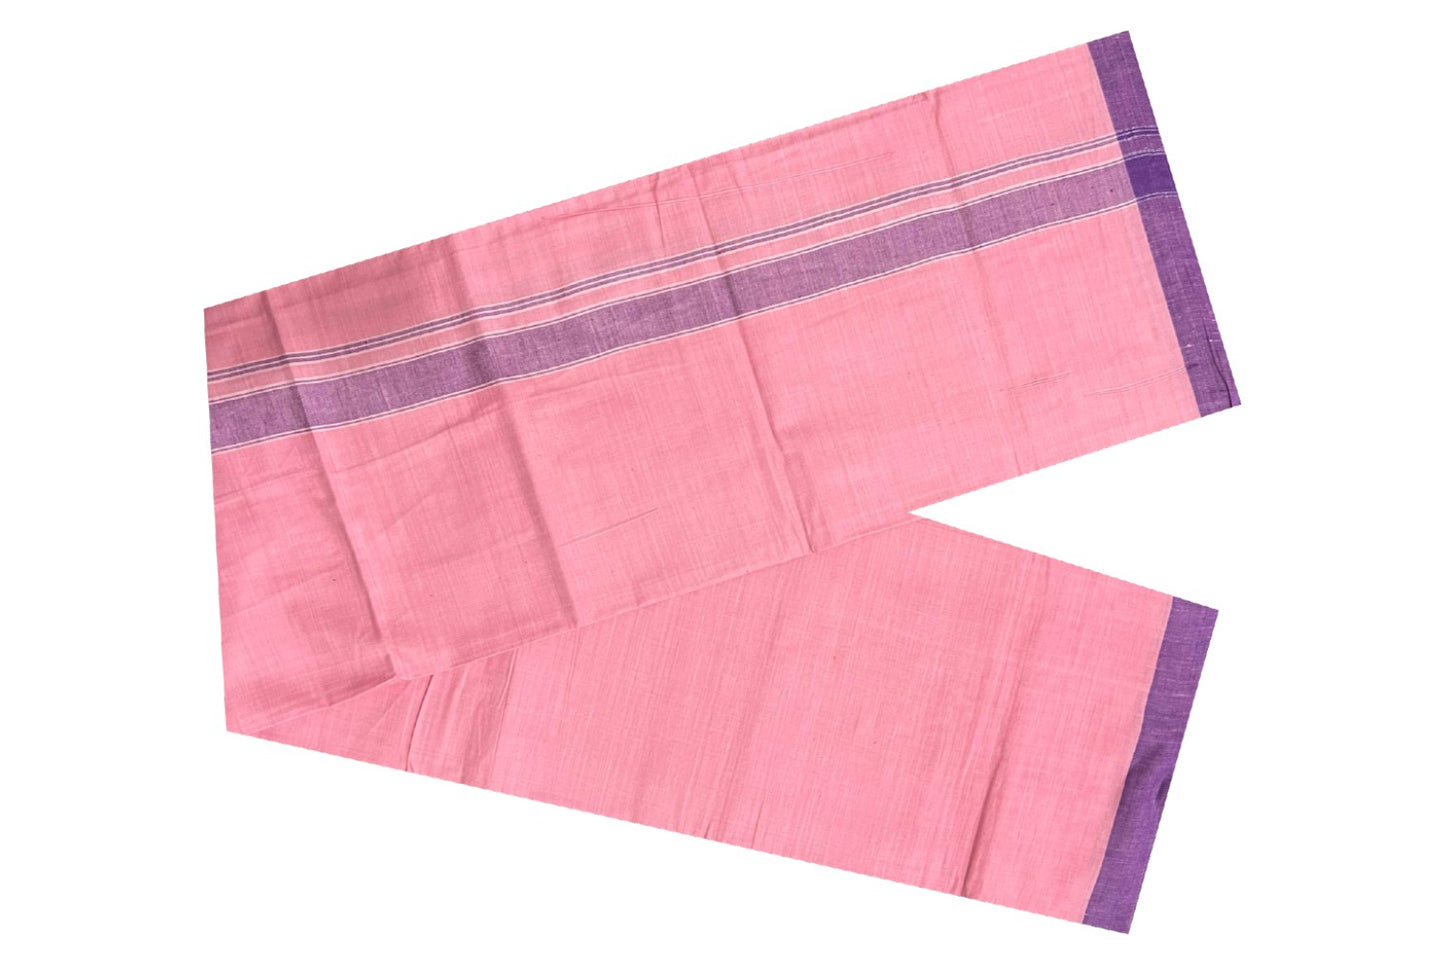 Southloom Premium Handloom Pink Single Mundu with Violet Border (Lungi)